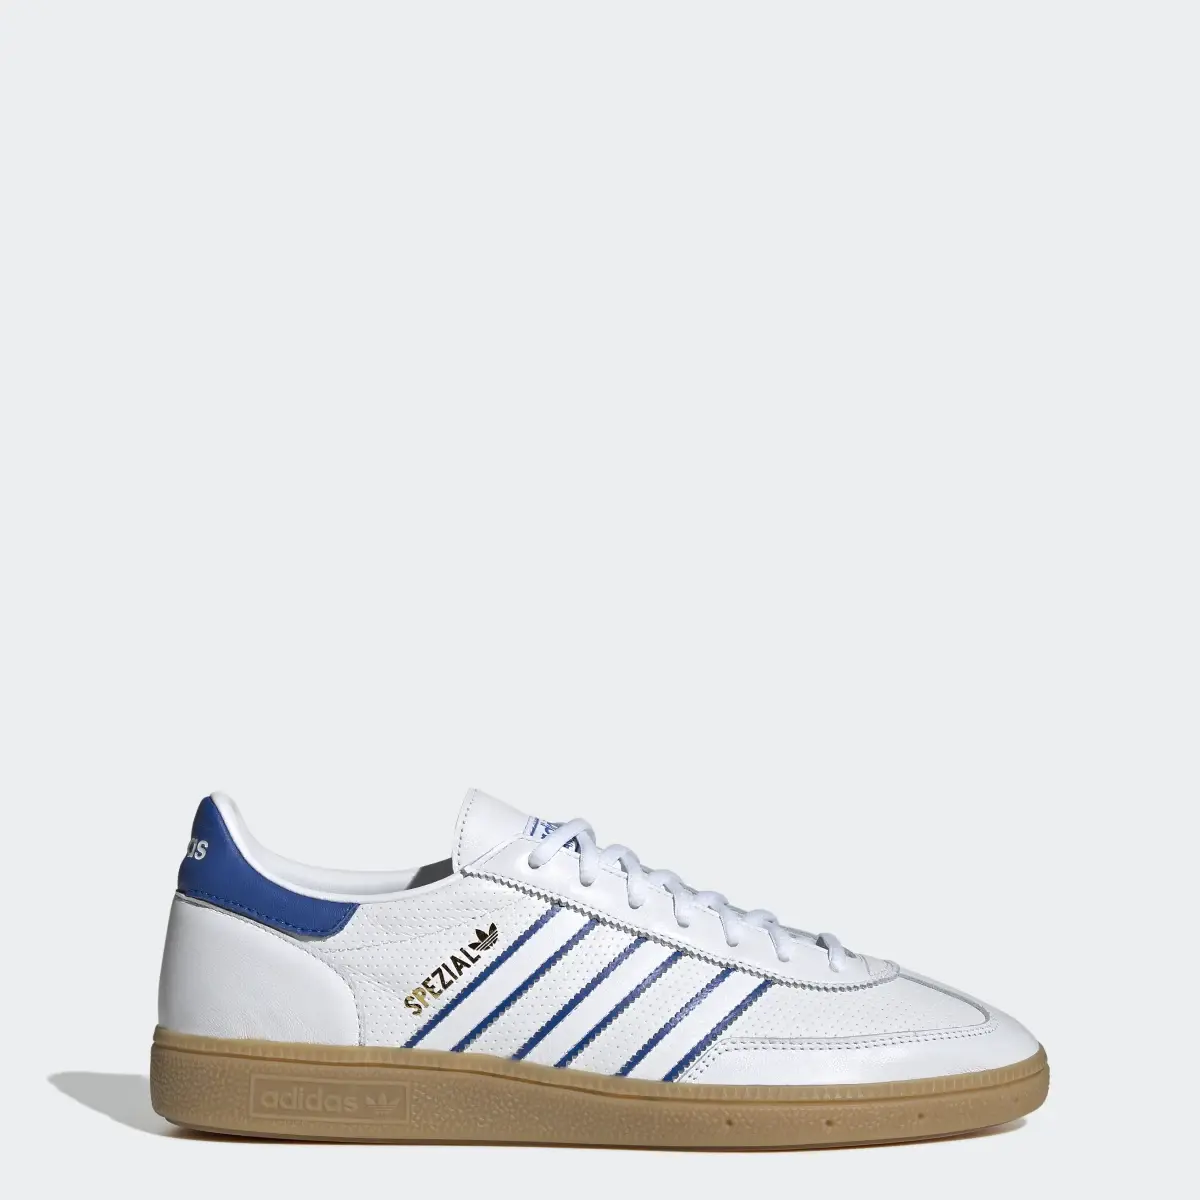 Adidas Handball Spezial Shoes. 1